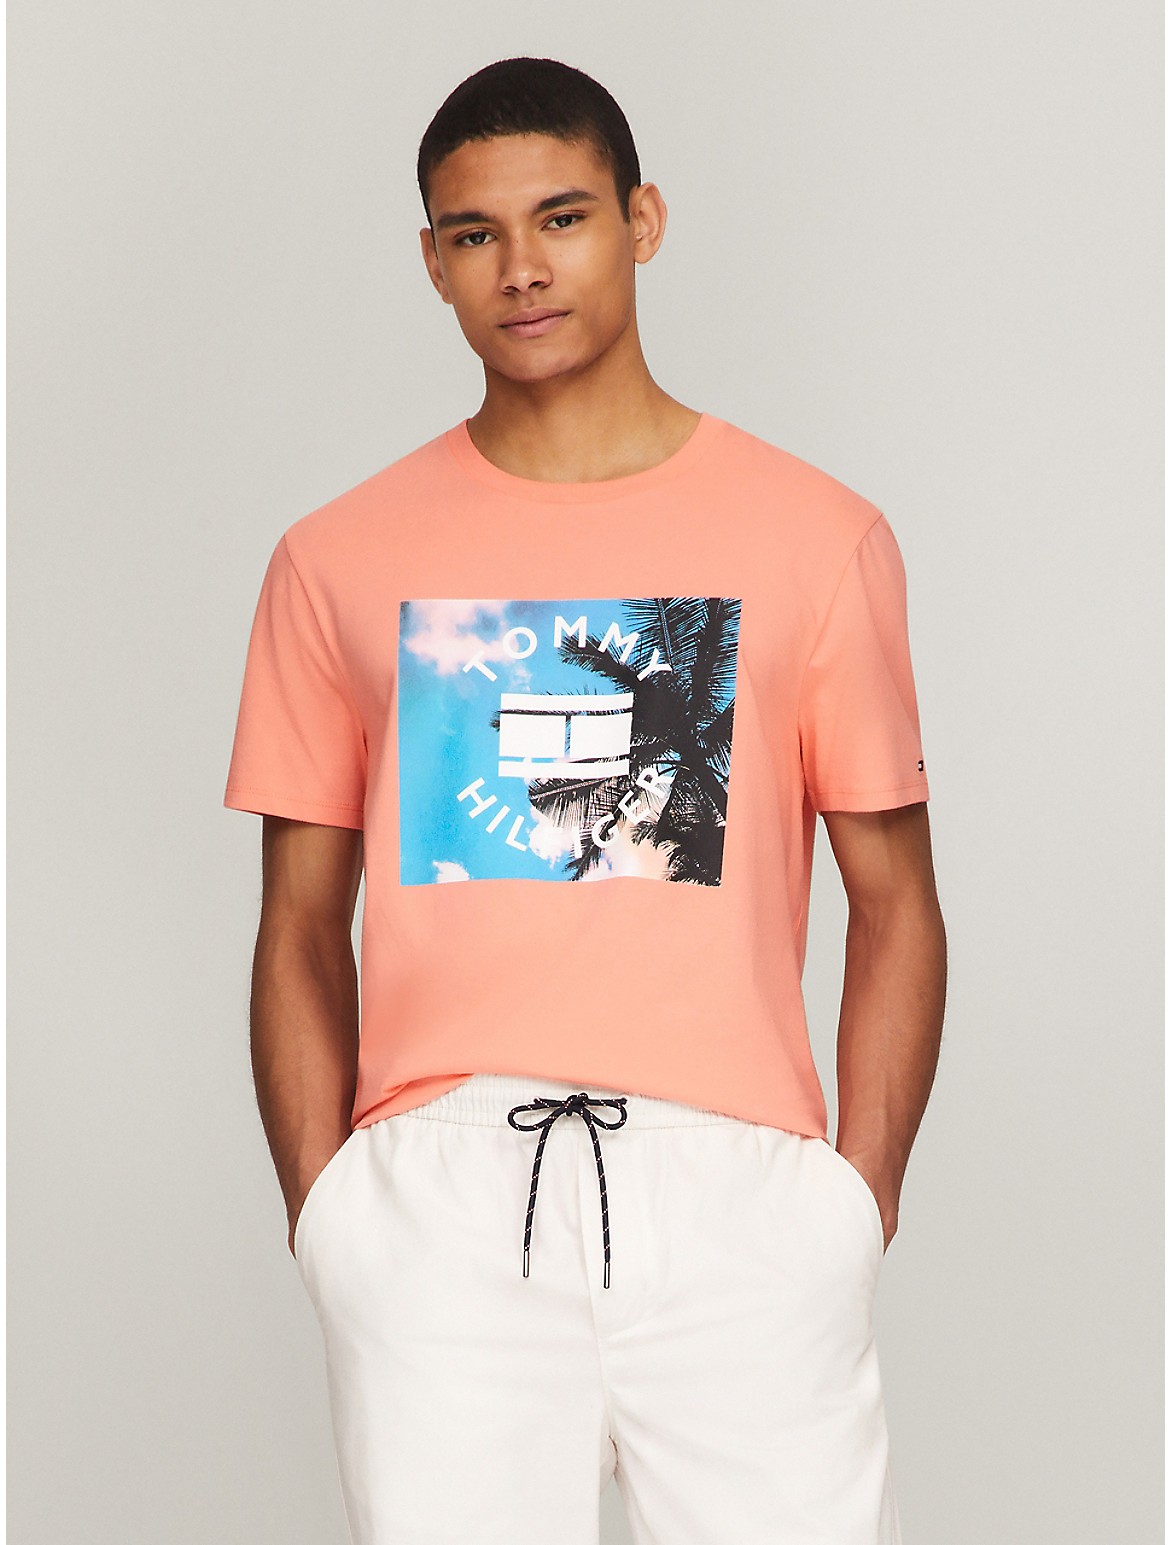 Tommy Hilfiger Men's TH Beach Vibe Graphic T-Shirt